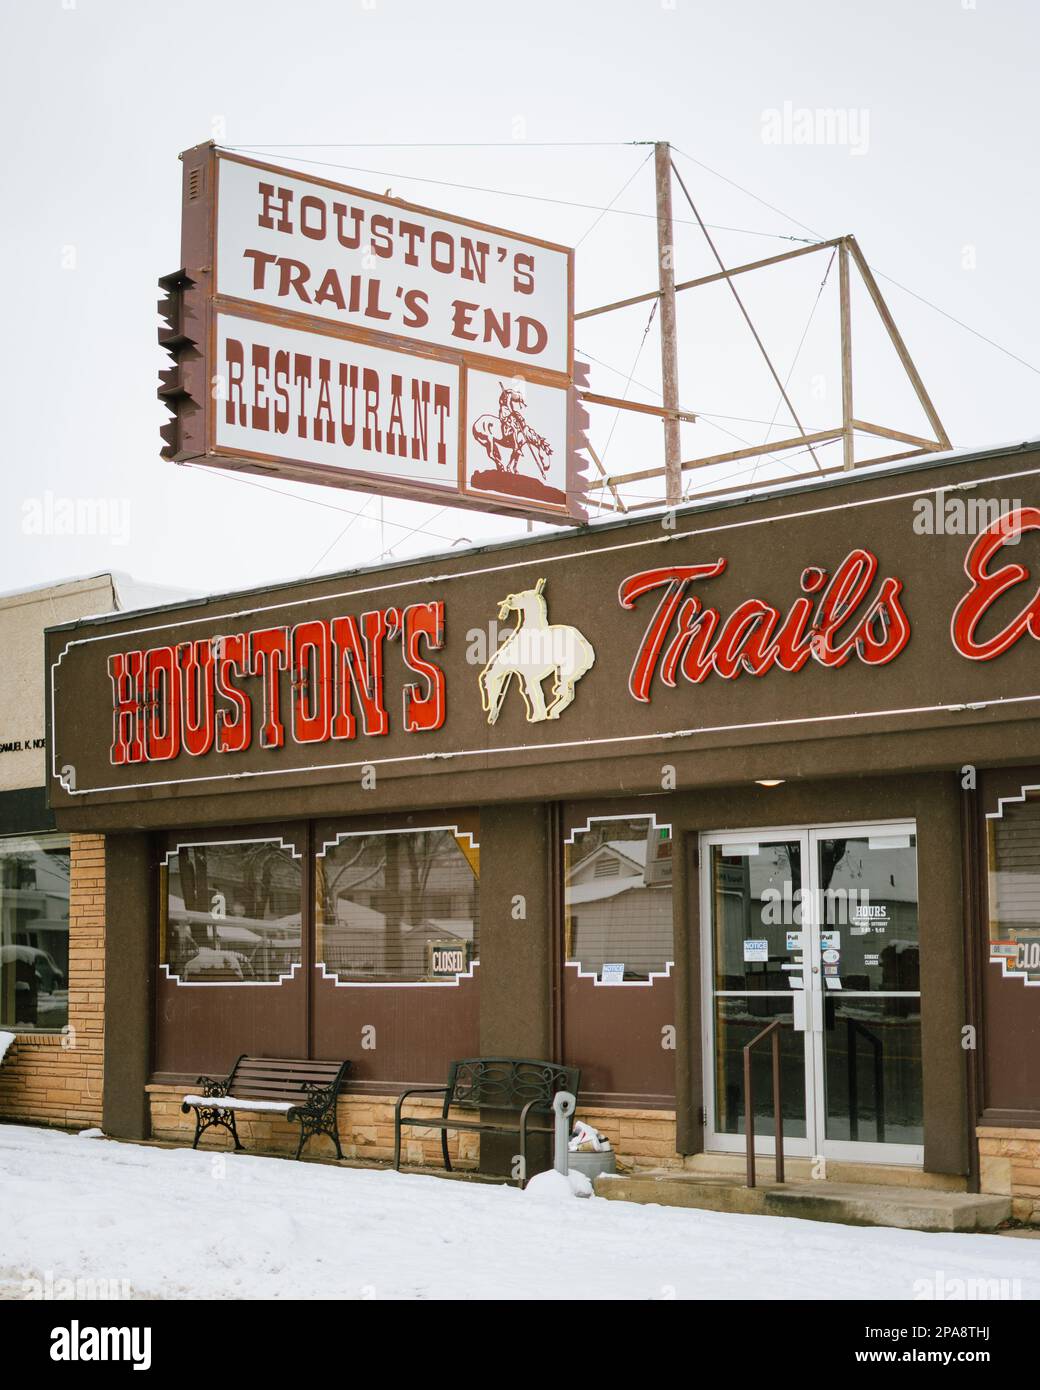 Houstons Trails End Restaurant vintage sign, Kanab, Utah Stock Photo